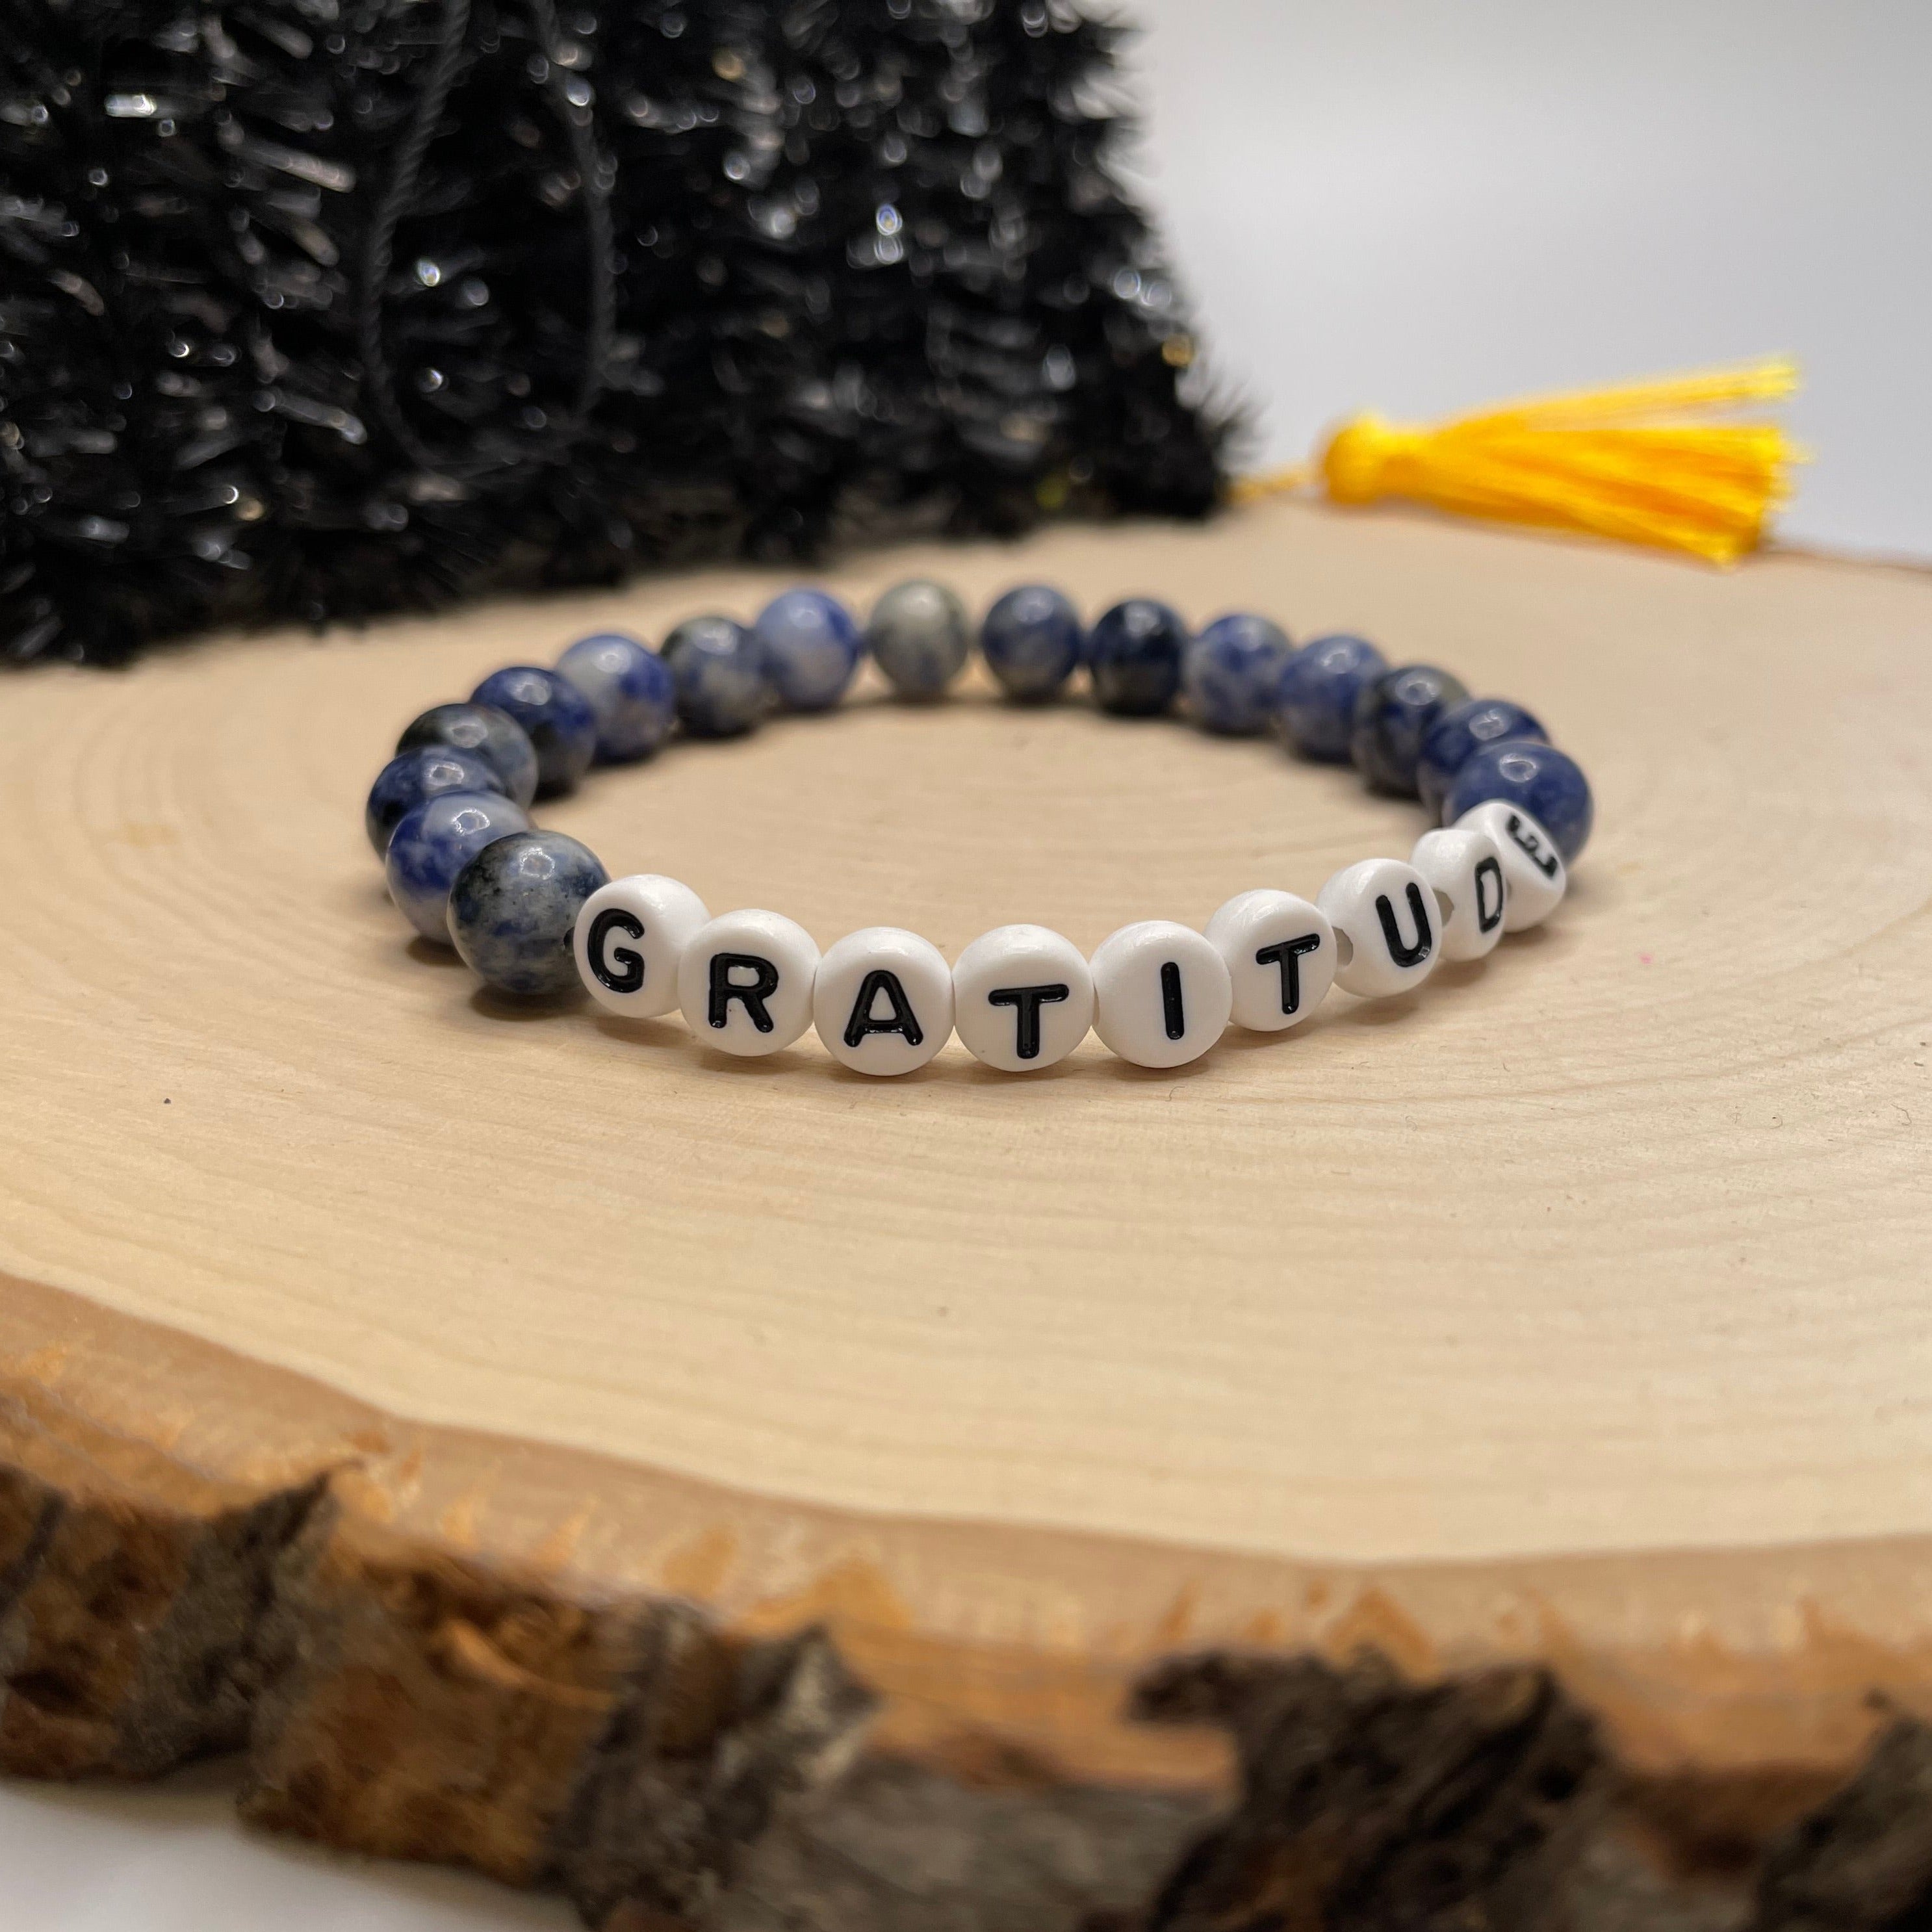 Gratitude bracelet